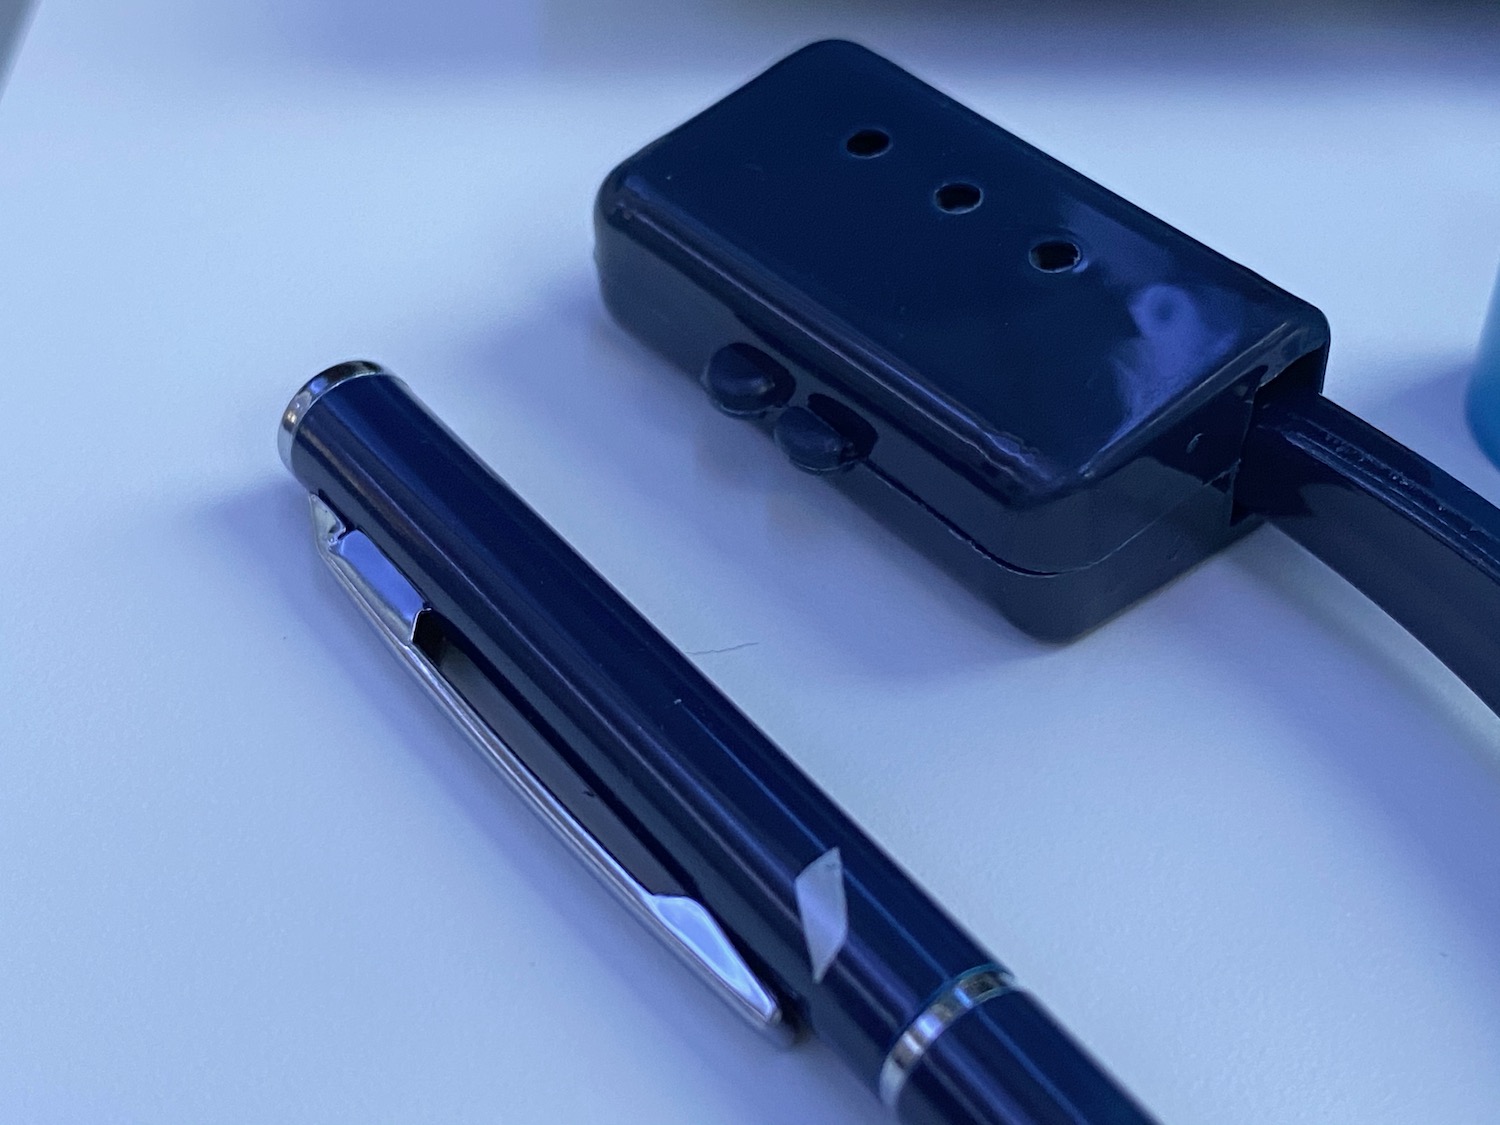 a pen and a blue pen